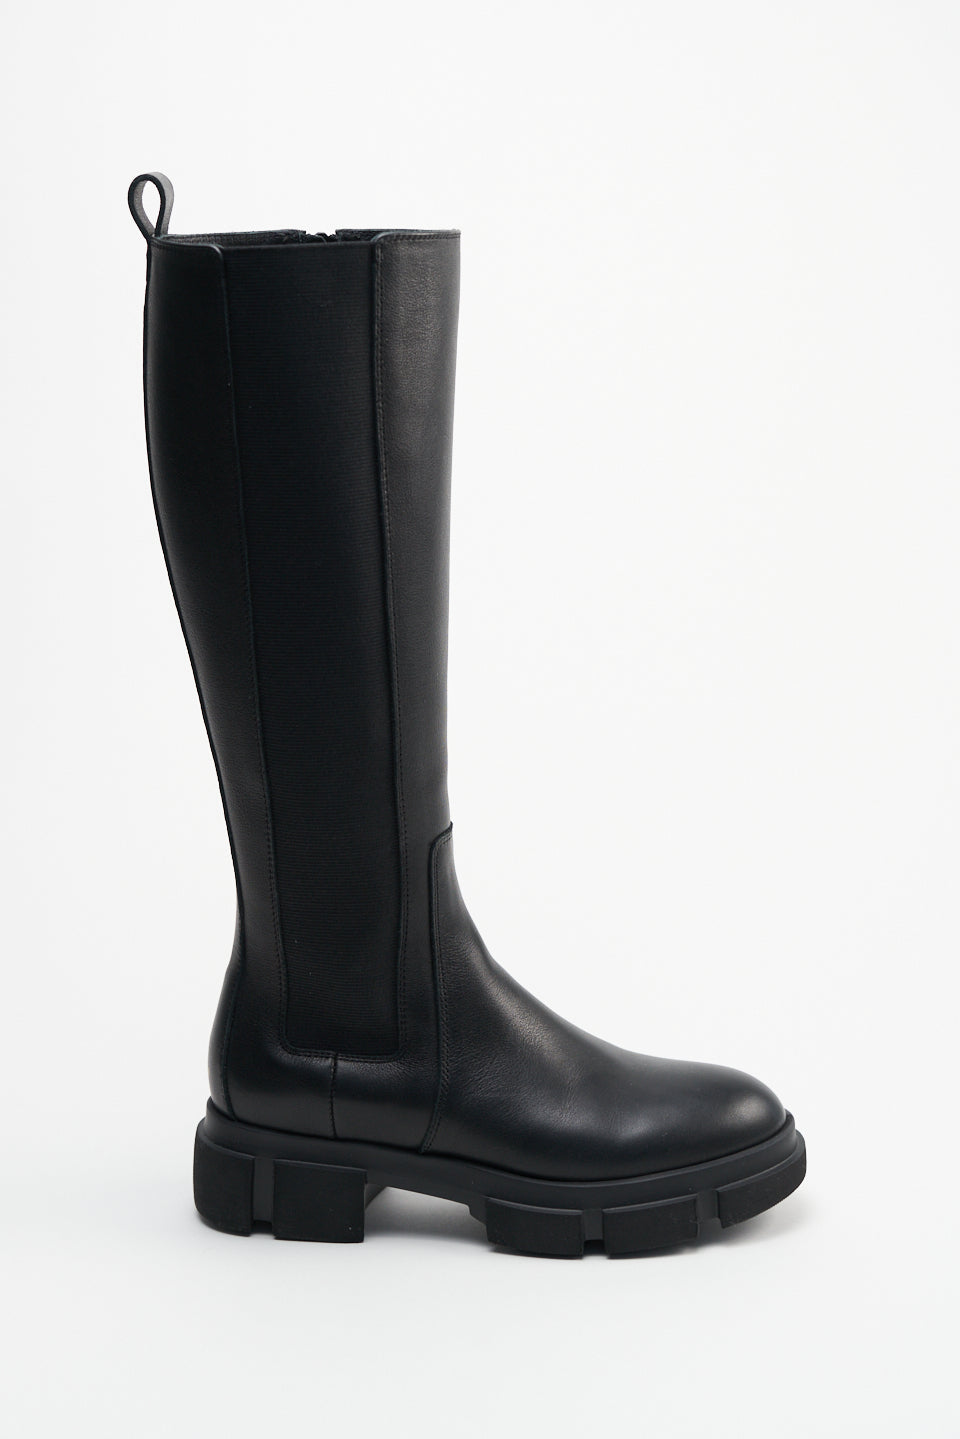 Vitello Black High Chelsea Boots CPH667BLACK - 7